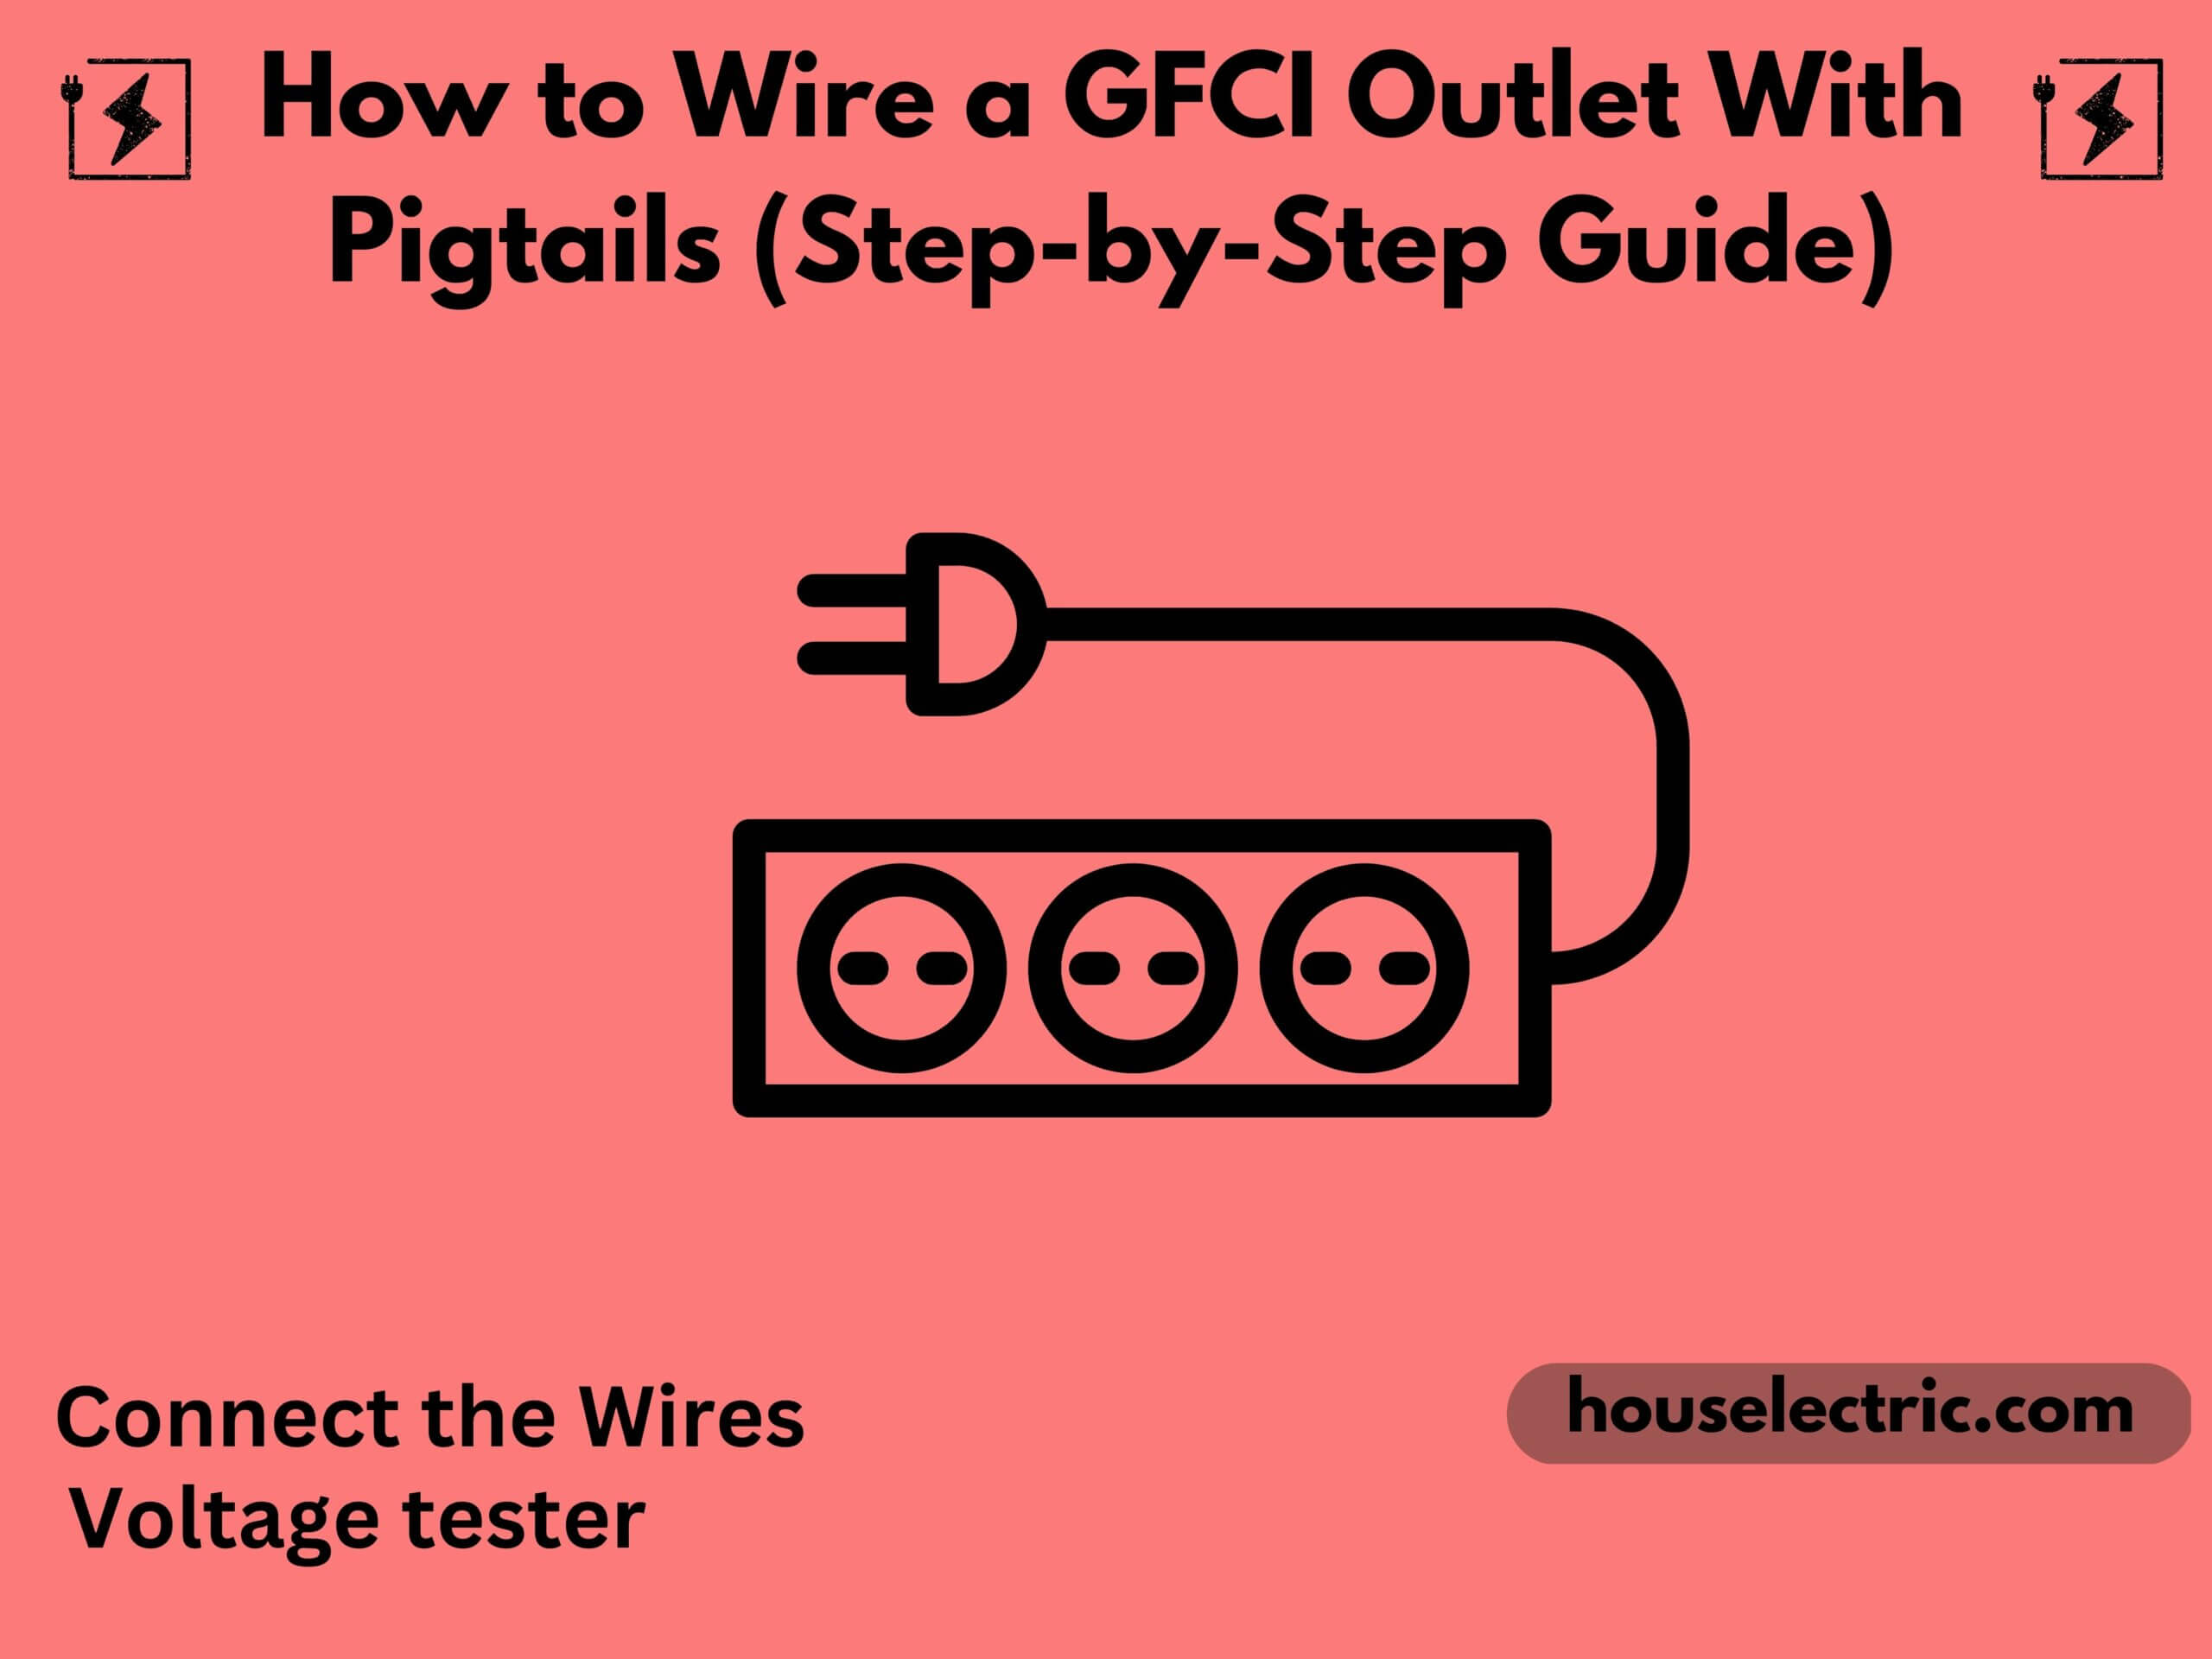 Wire a GFCI Outlet